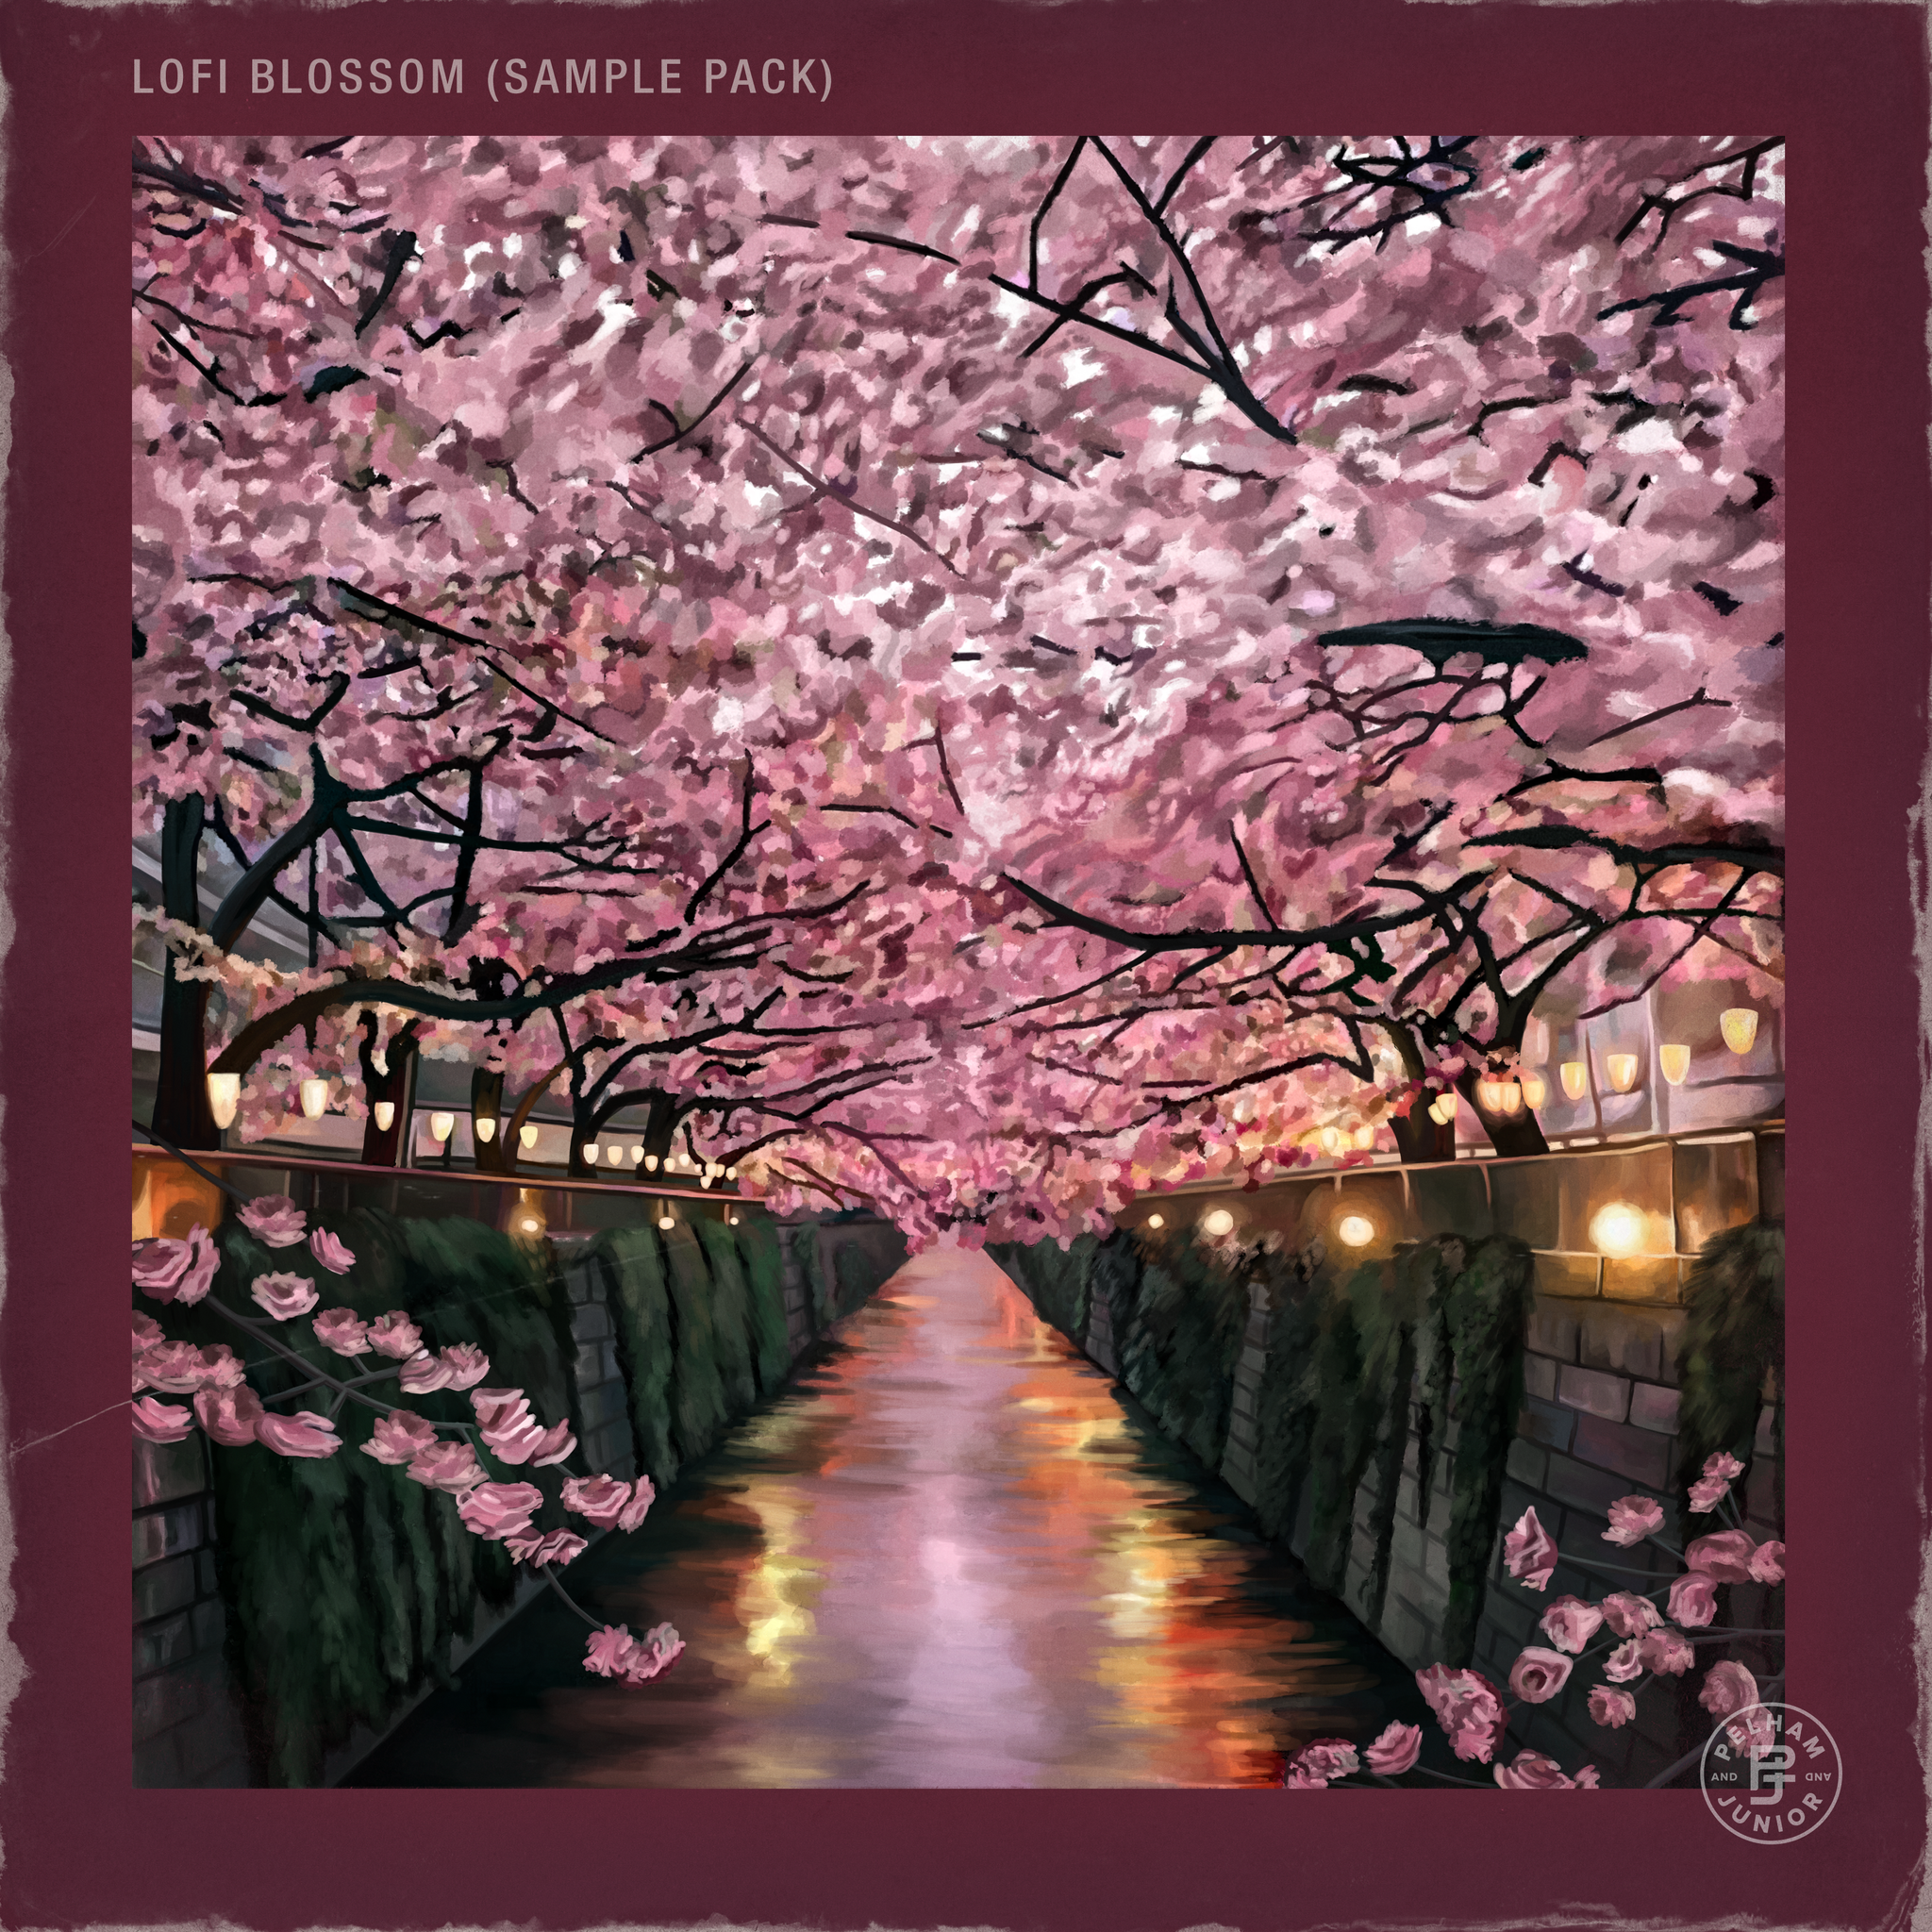 LoFi Blossom - Sample Pack